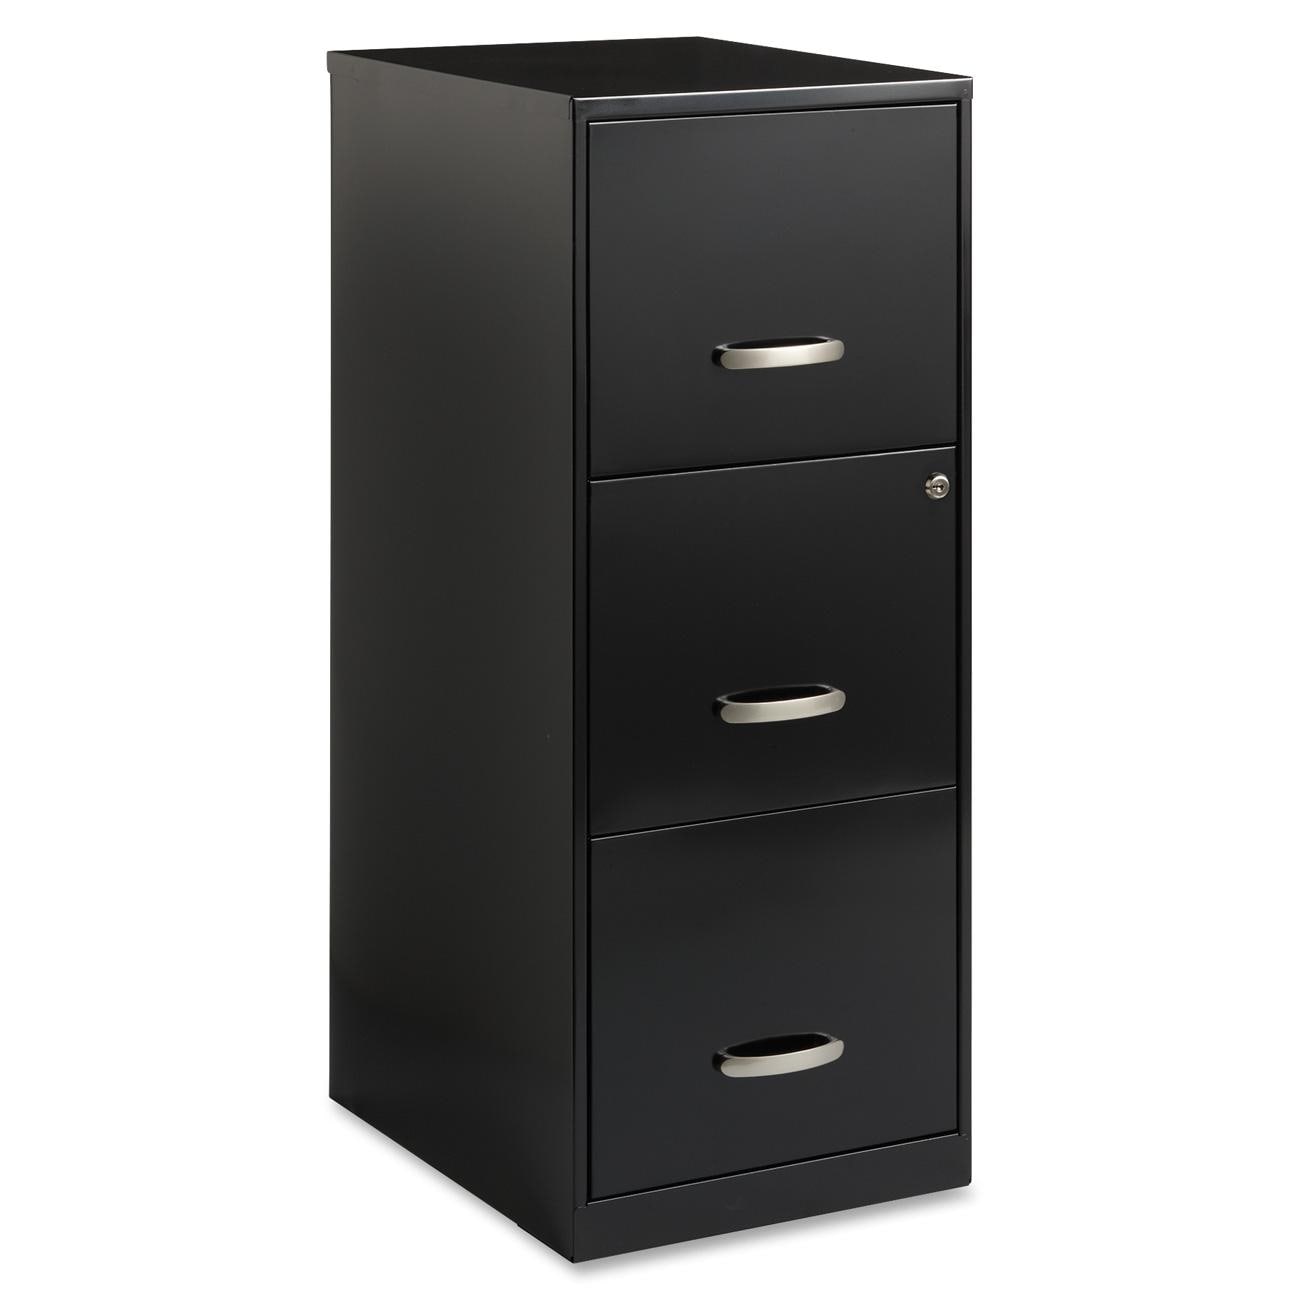 Black STEELCUBE 3 Drawer File Cabinet with Lock Metal Vertical Filing Cabinet on Anti-tilt Wheels Metal Filing Cabinet Legal/Letter Size 